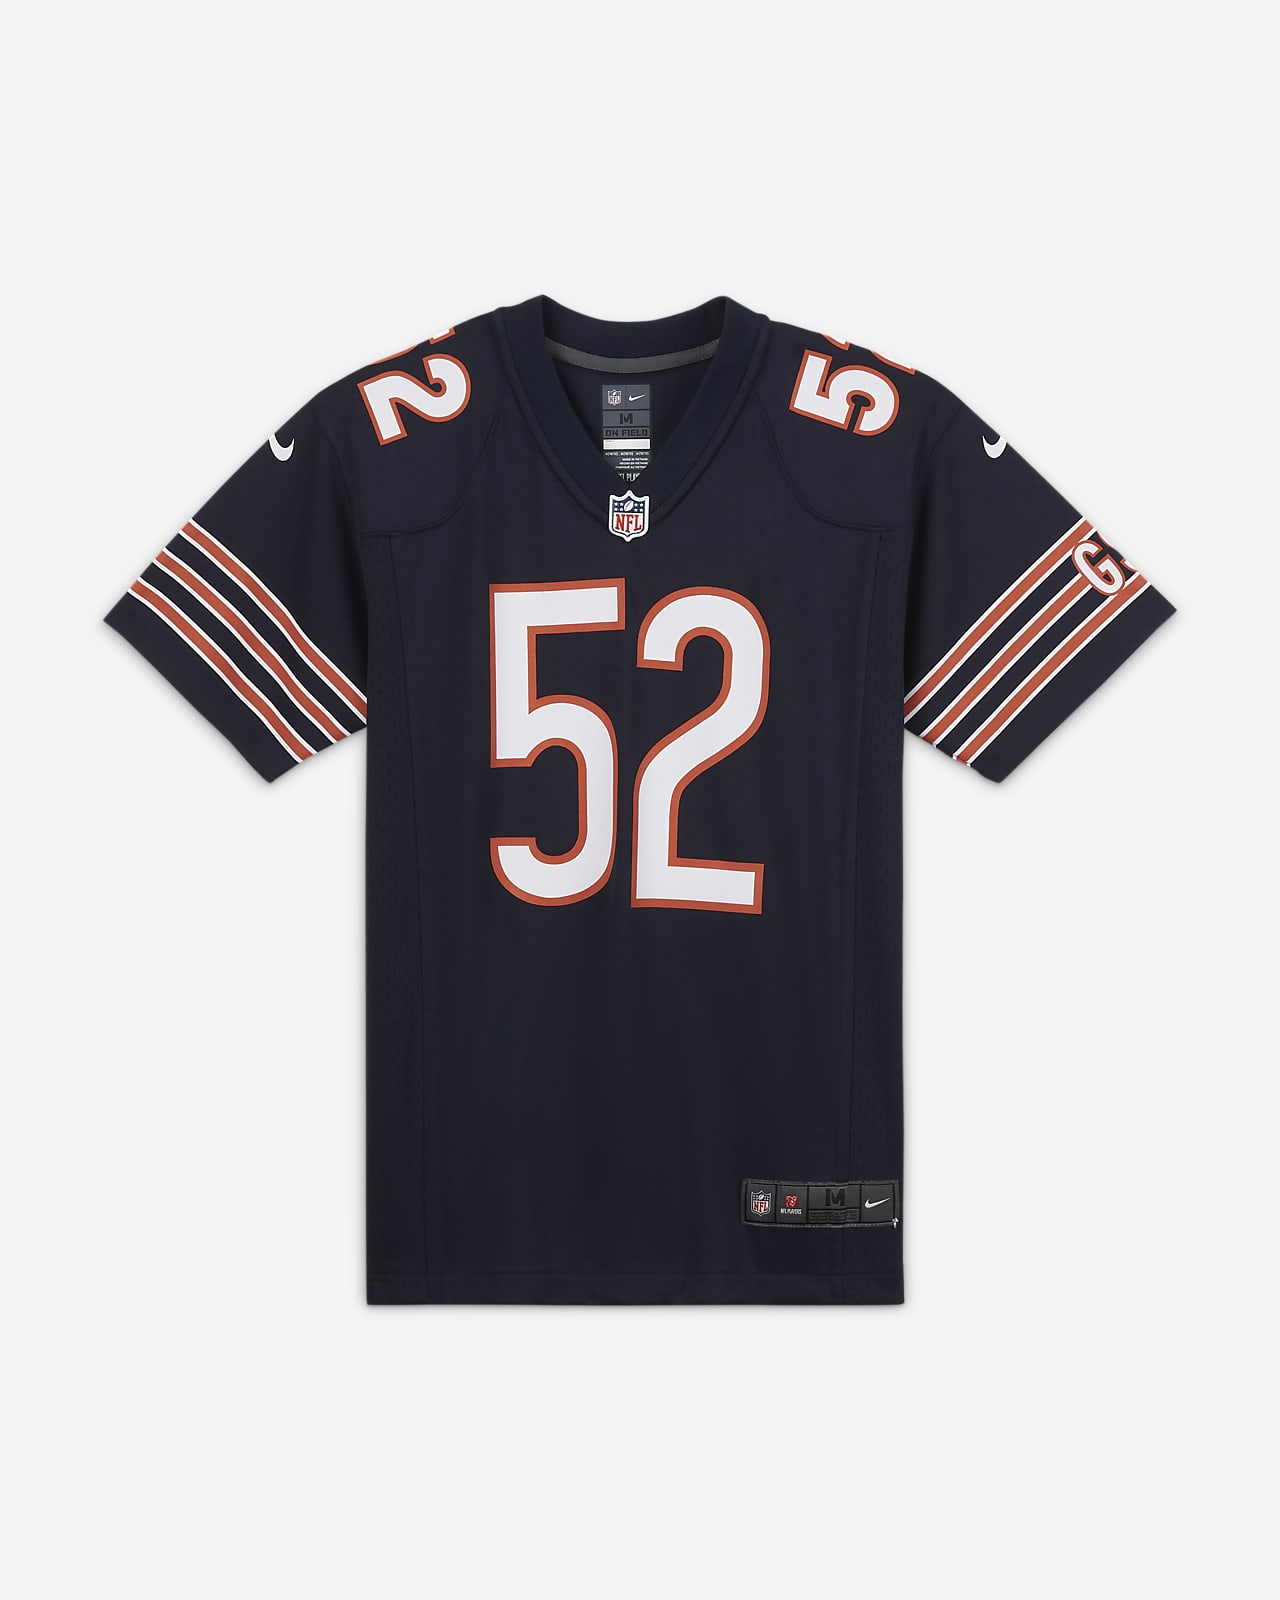 Maglia da football americano Chicago Bears (Khalil Mack) Game NFL - Uomo